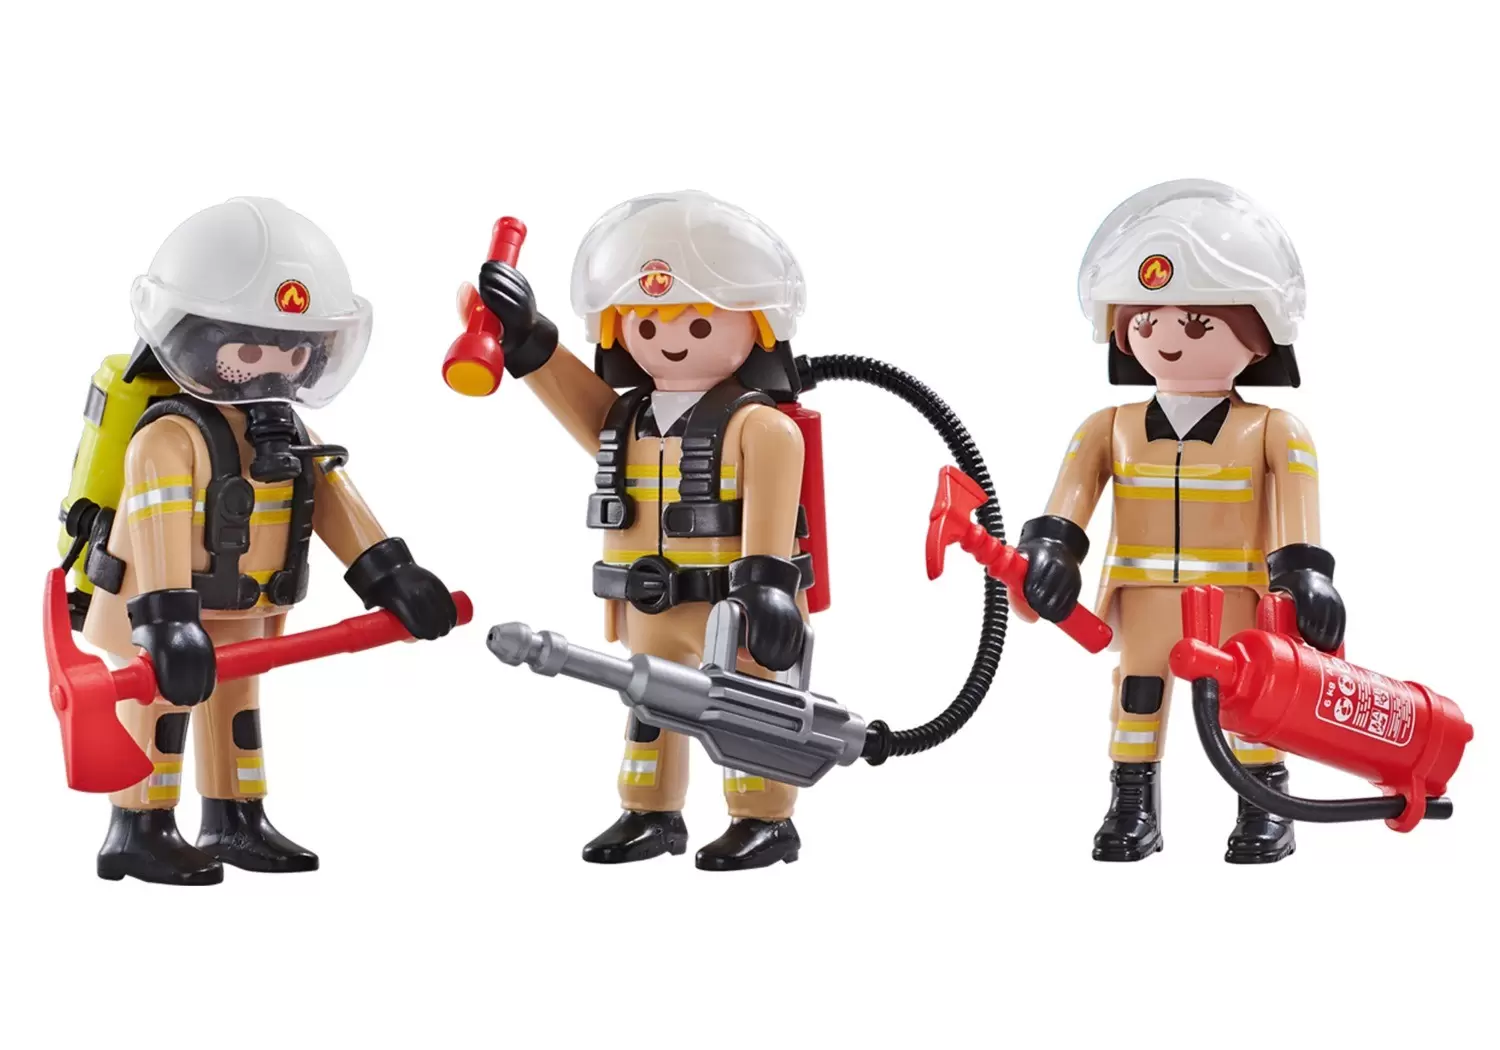 Playmobil Porsche Macan S Firefighter with figurine Playmobil